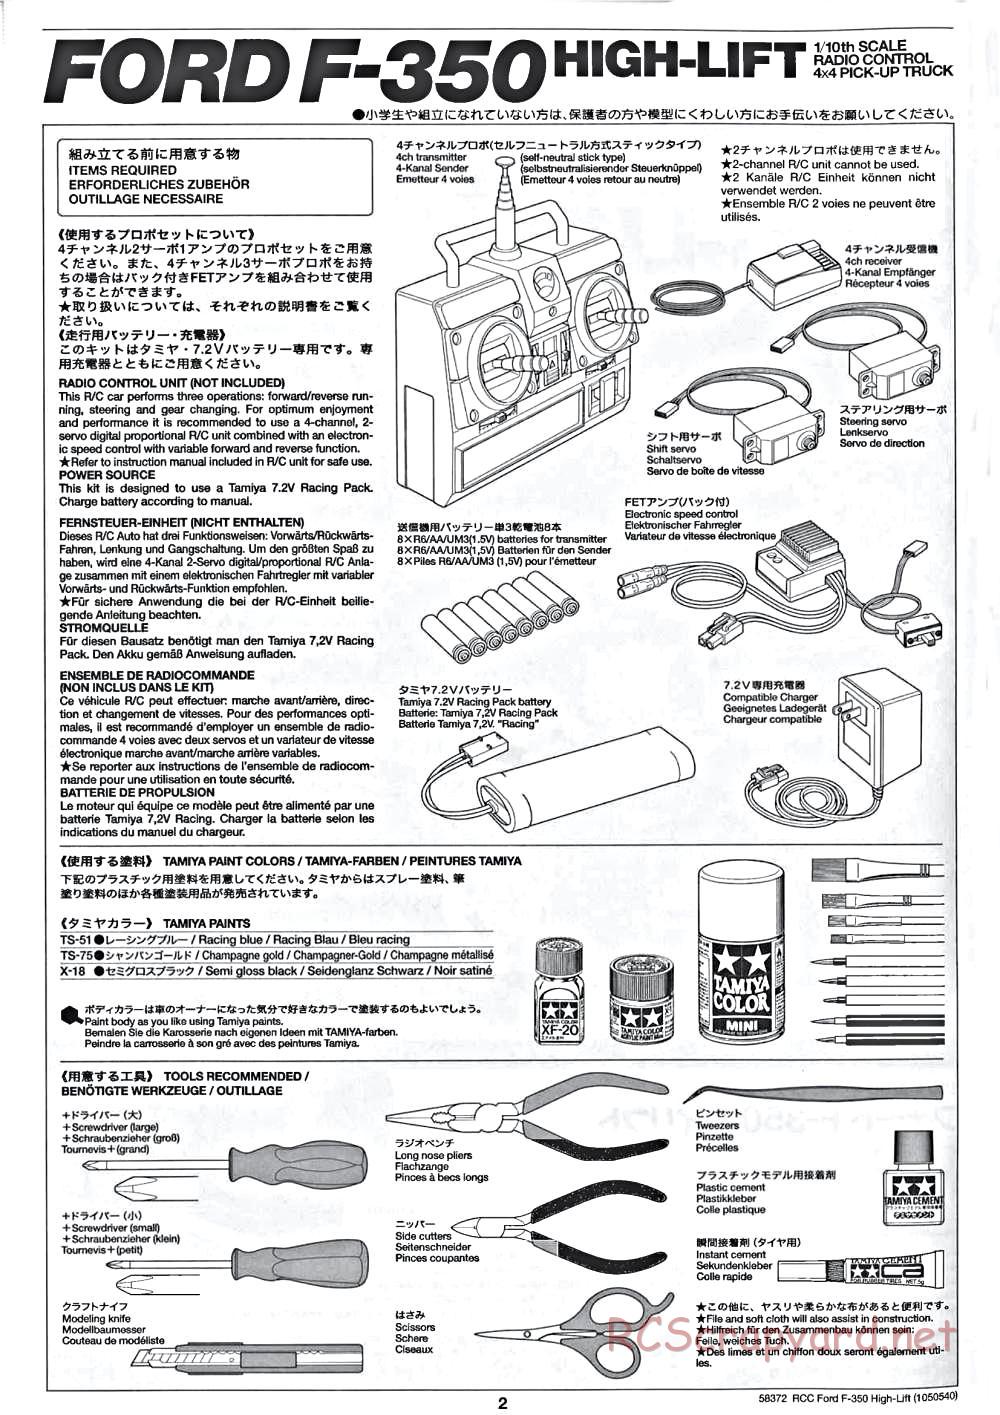 Tamiya - Ford F350 High-Lift Chassis - Manual - Page 2